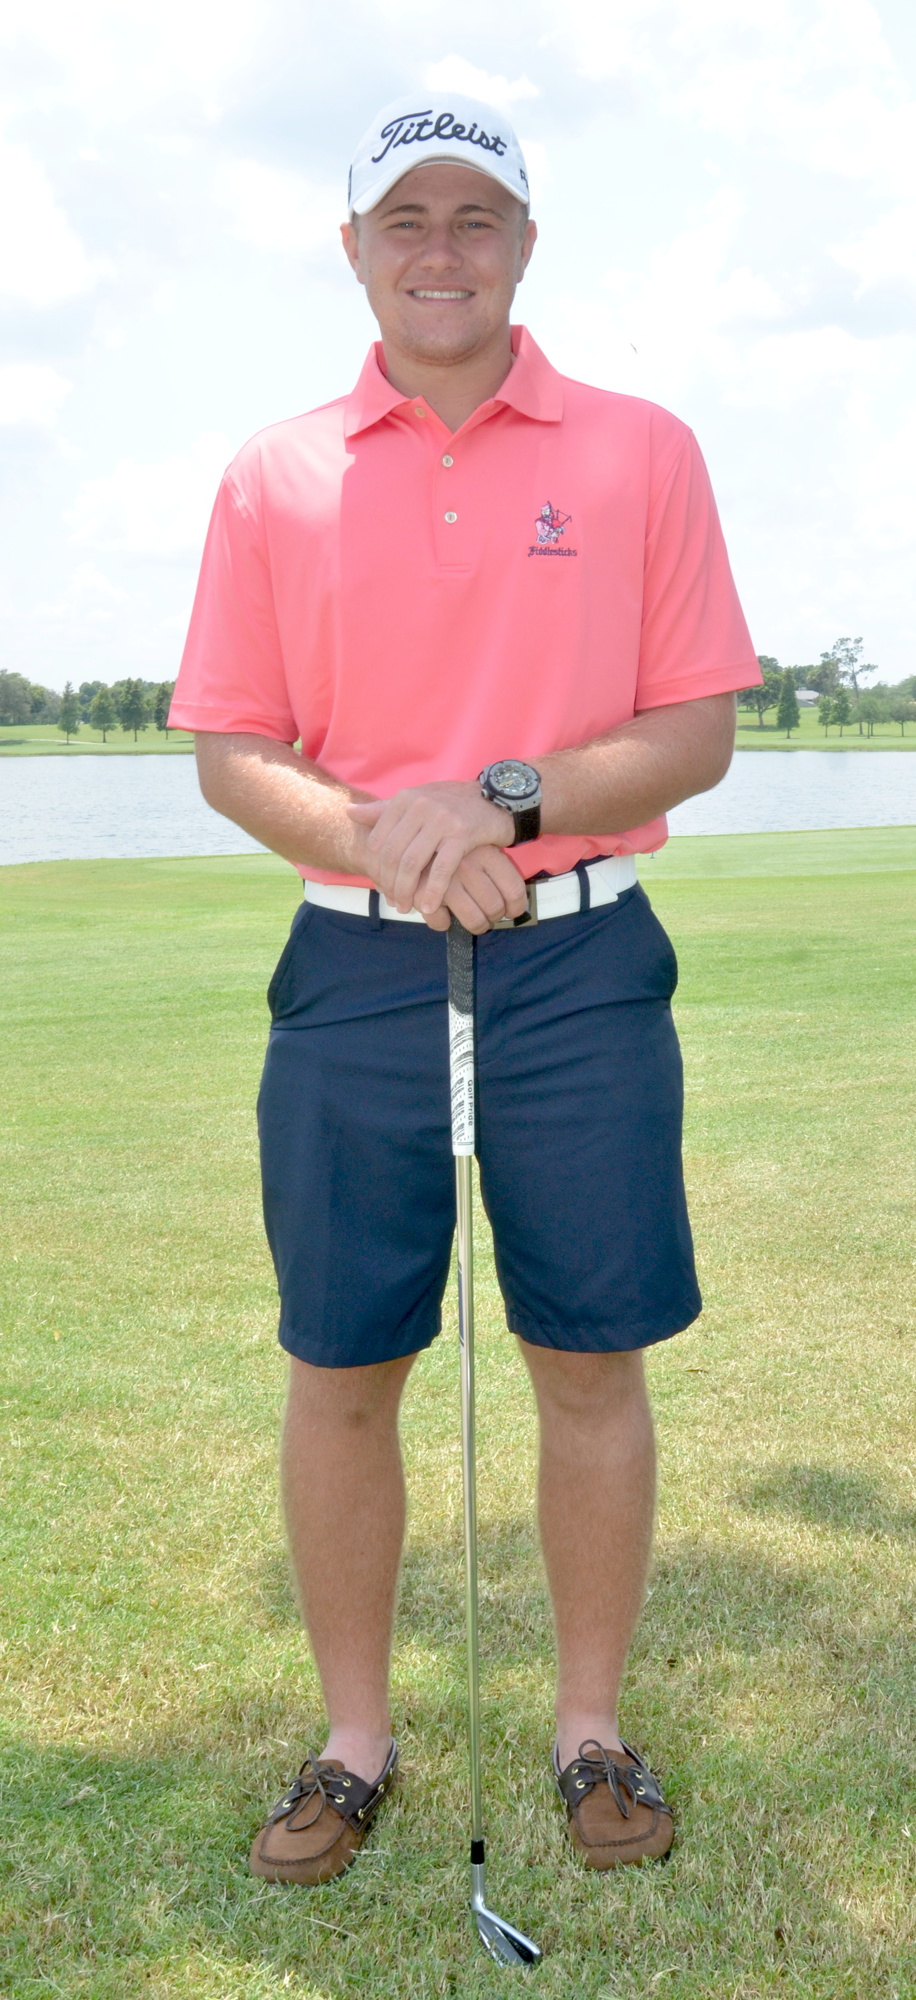 Jacob Huizinga won the 2016 Florida State Golf Association Amateur Championship in Fort Myers.